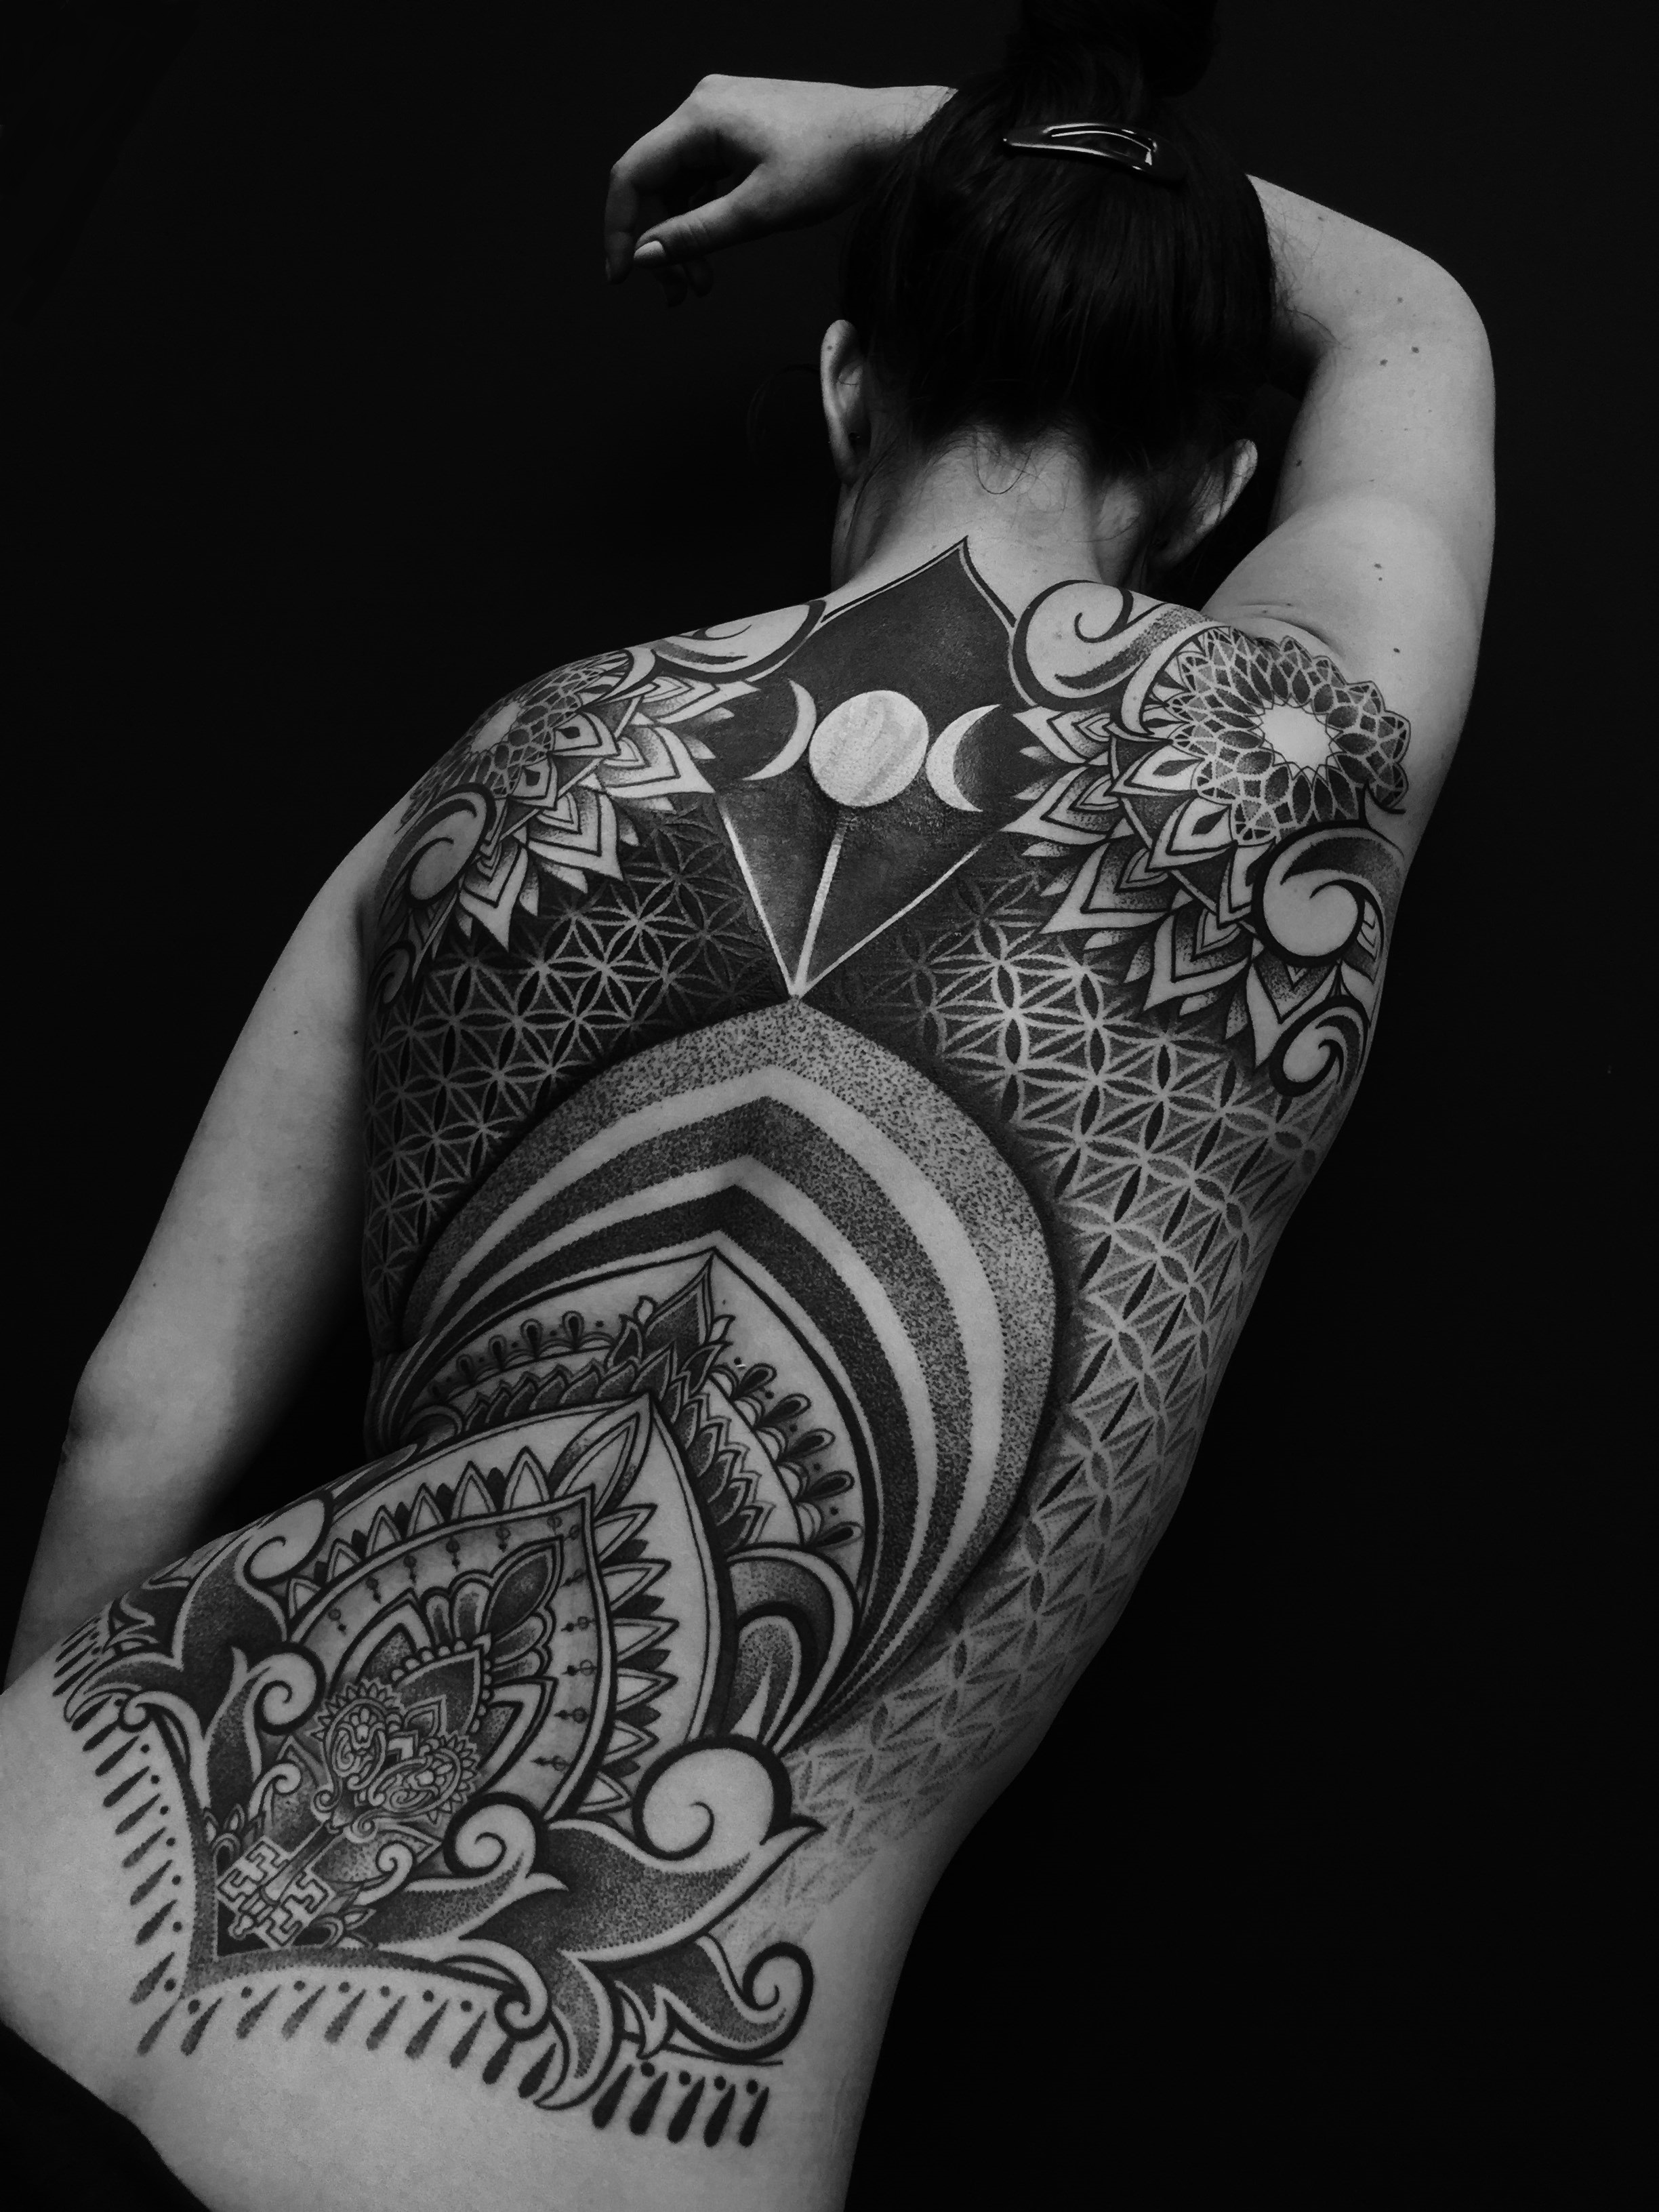 Santos Tattoo - Santos Tattoo Shop: Polynesian Tattoo artist: - OMAR SANTOS  - per info: santos@santostattoo.com | Facebook